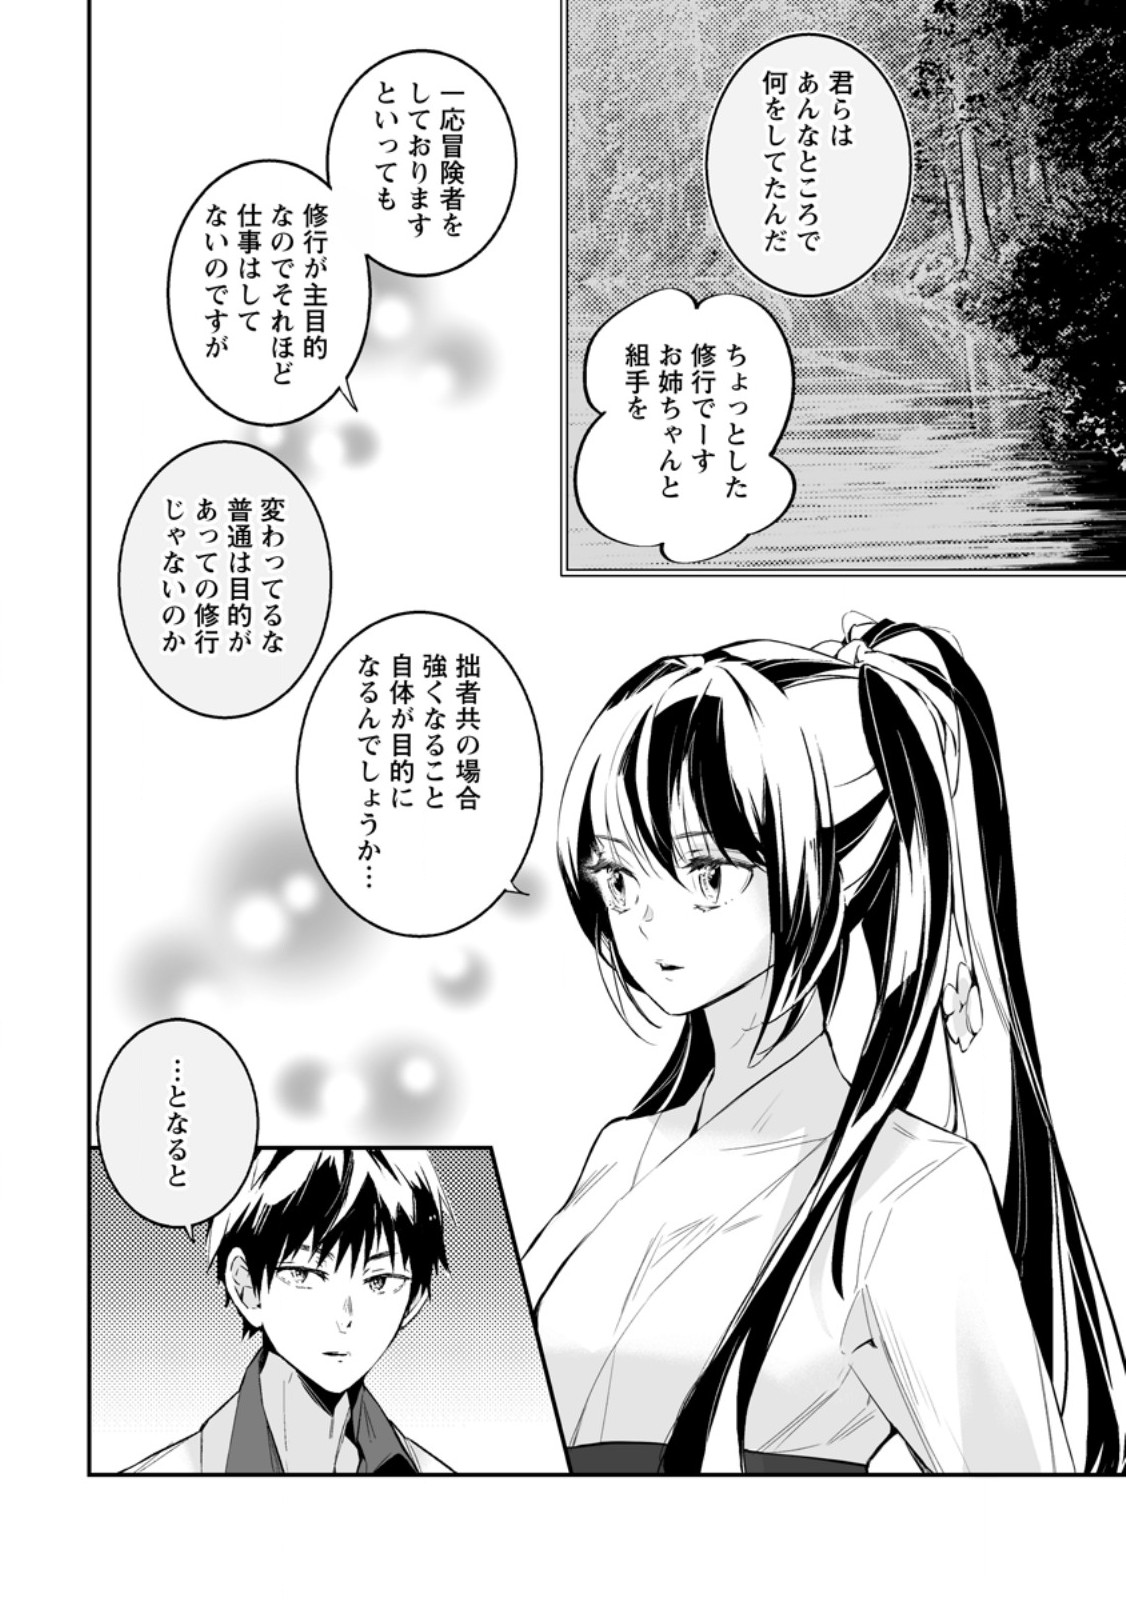 Hakui no Eiyuu - Chapter 31.1 - Page 4